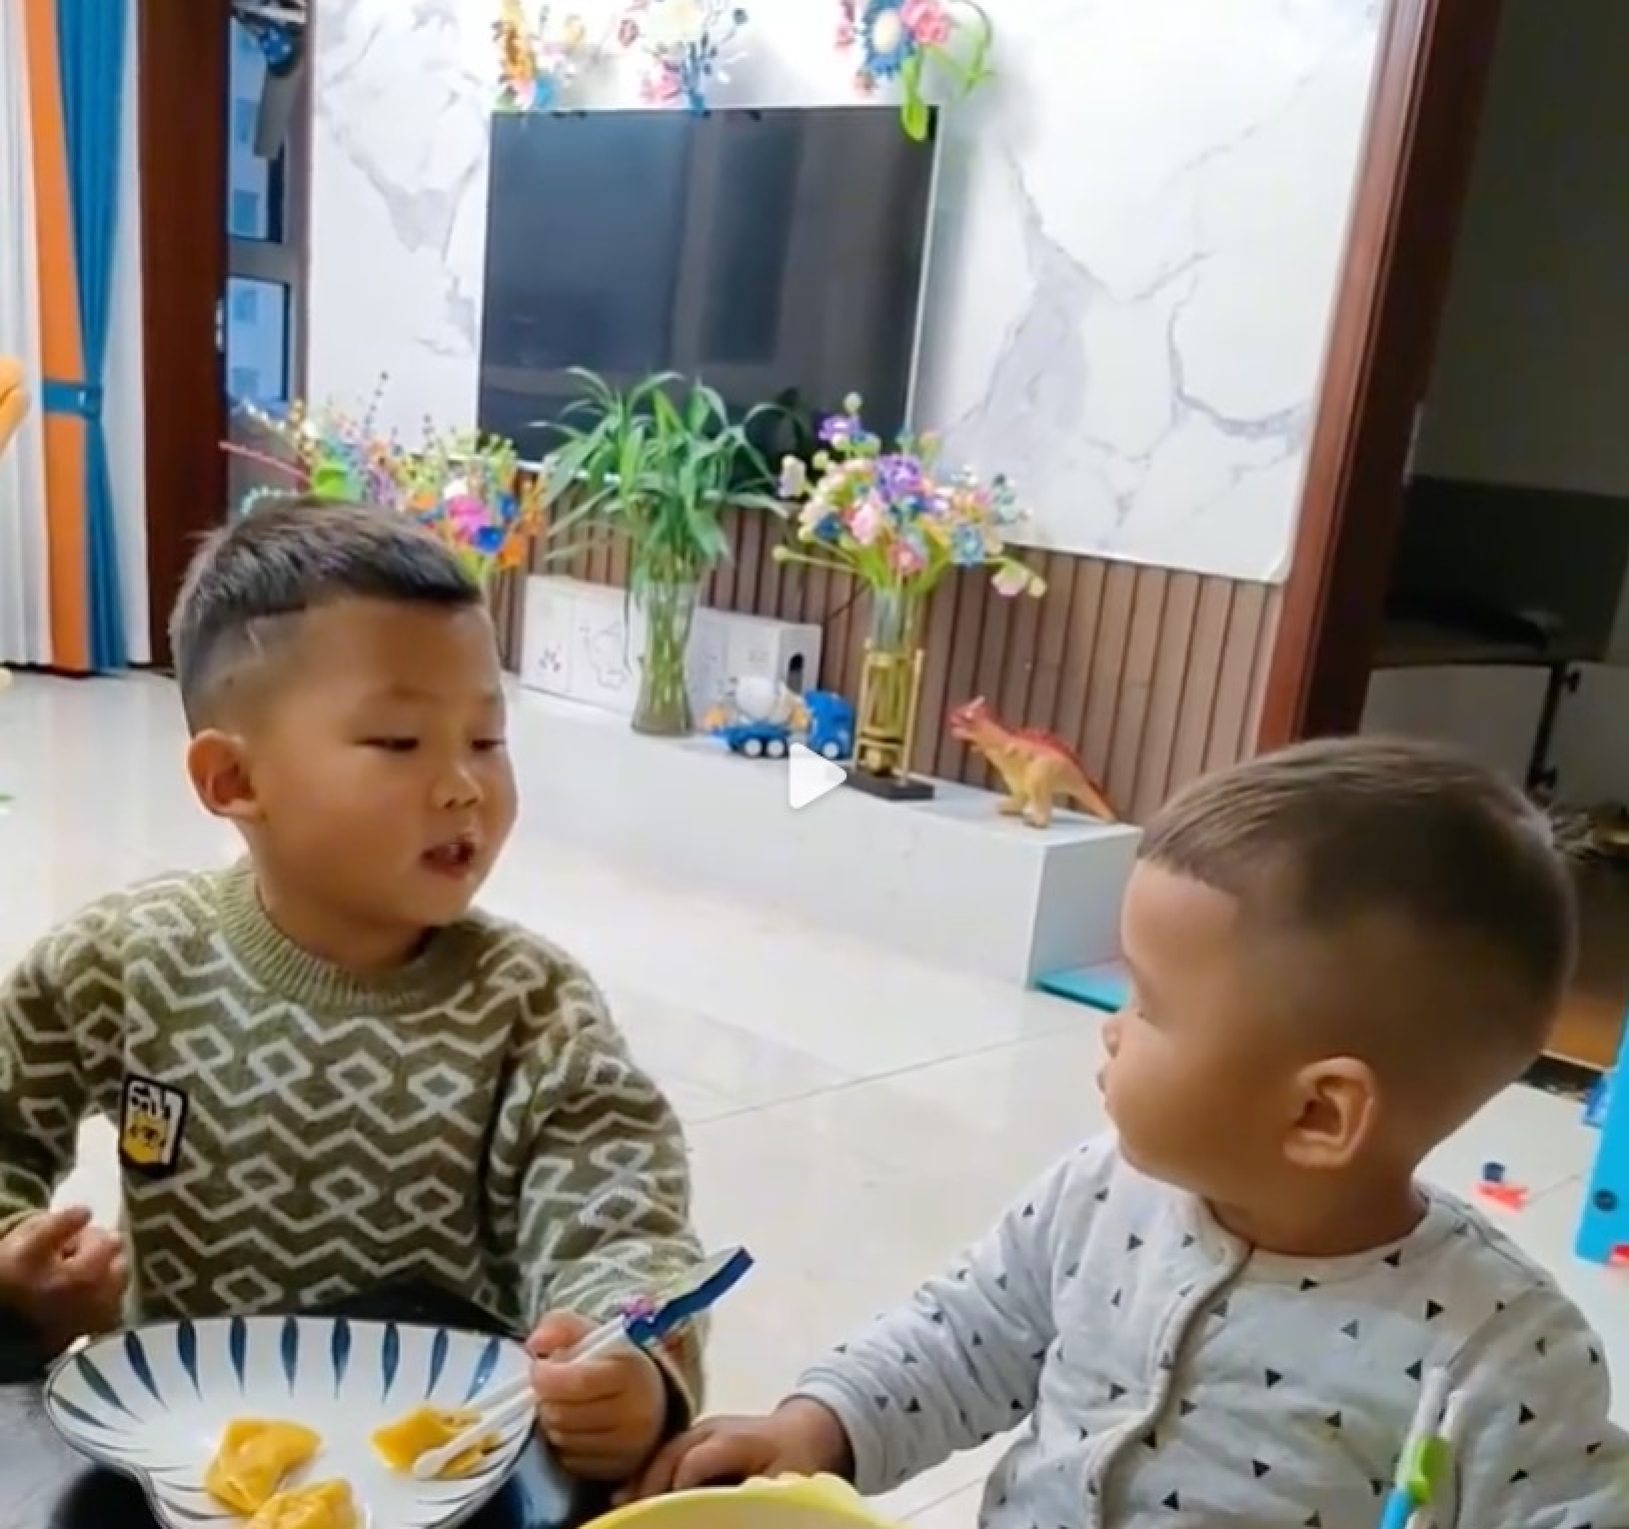 Children in China: grandfather bites boy for slow dishwashing, teaching ...